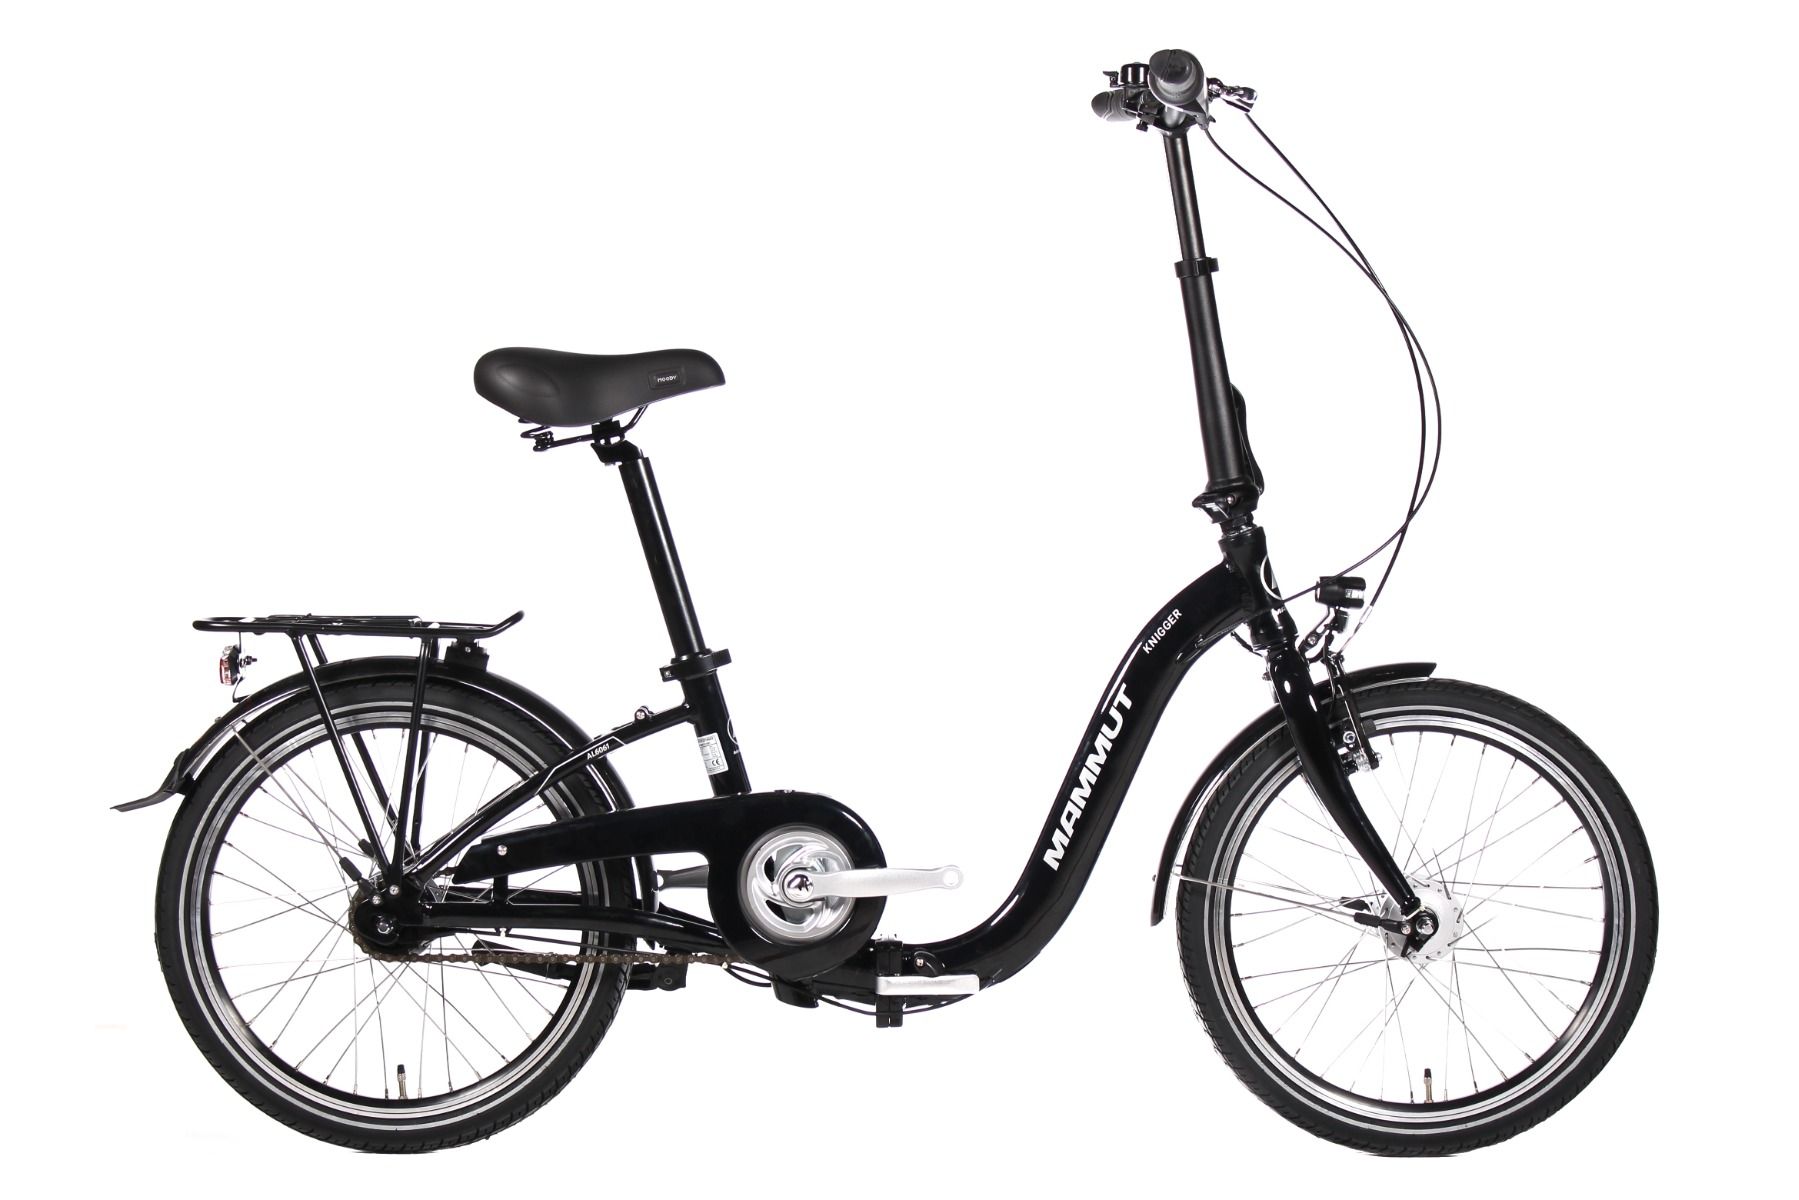 Mammut Faltrad 20-7 schwarz - Fahrrad Online Shop